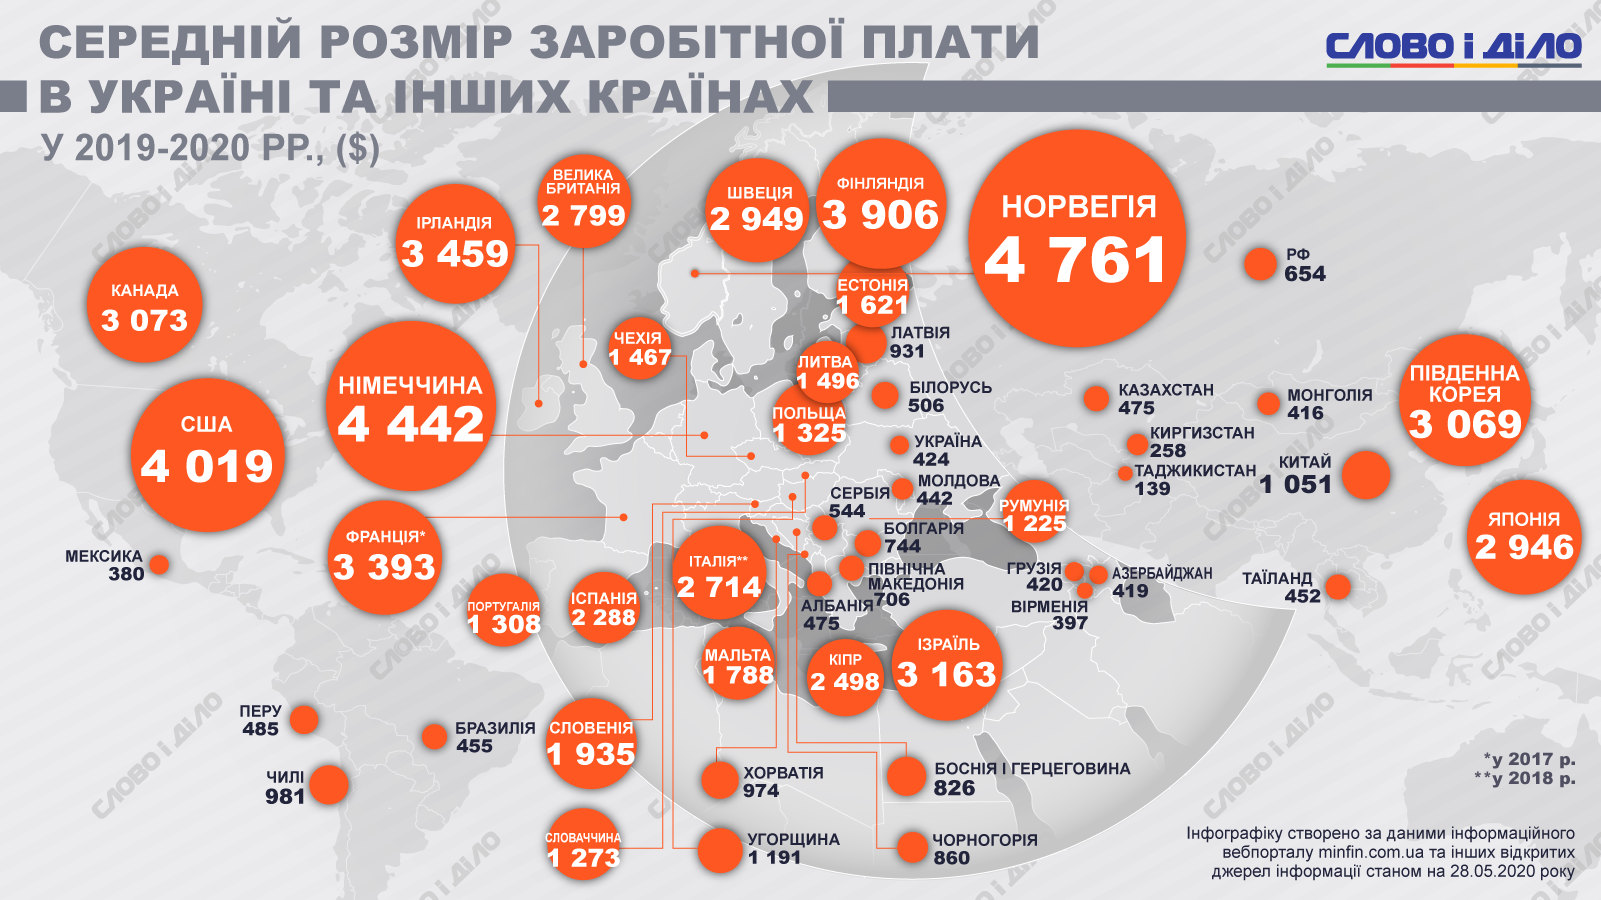 http://media.slovoidilo.ua/media/infographics/12/111850/111850-1_uk_origin.png